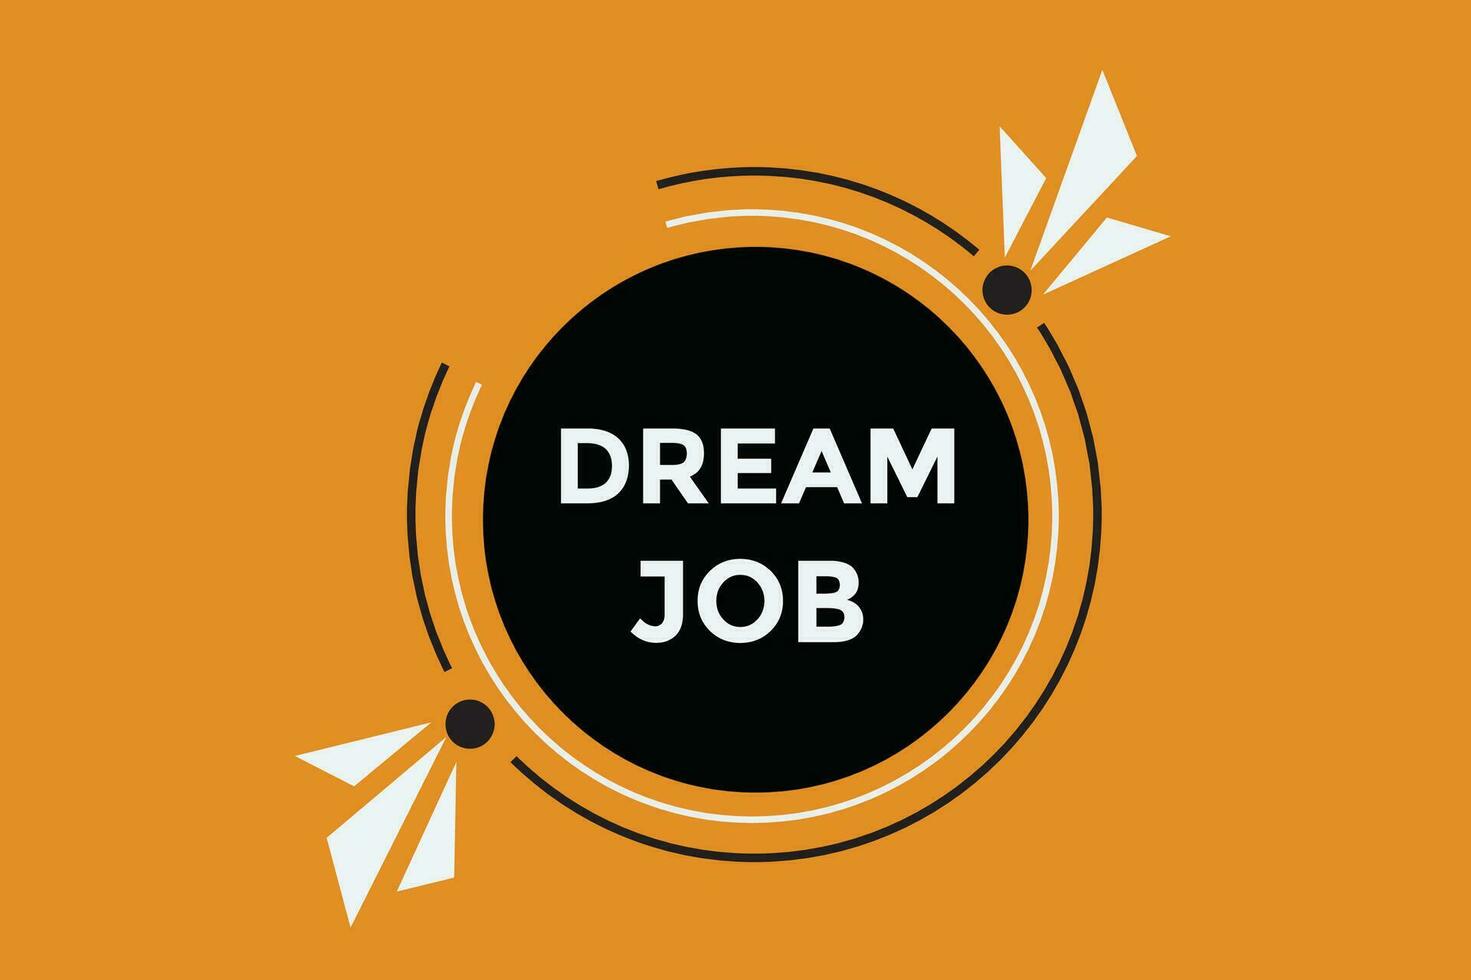 Dream job button web banner templates. Vector Illustration